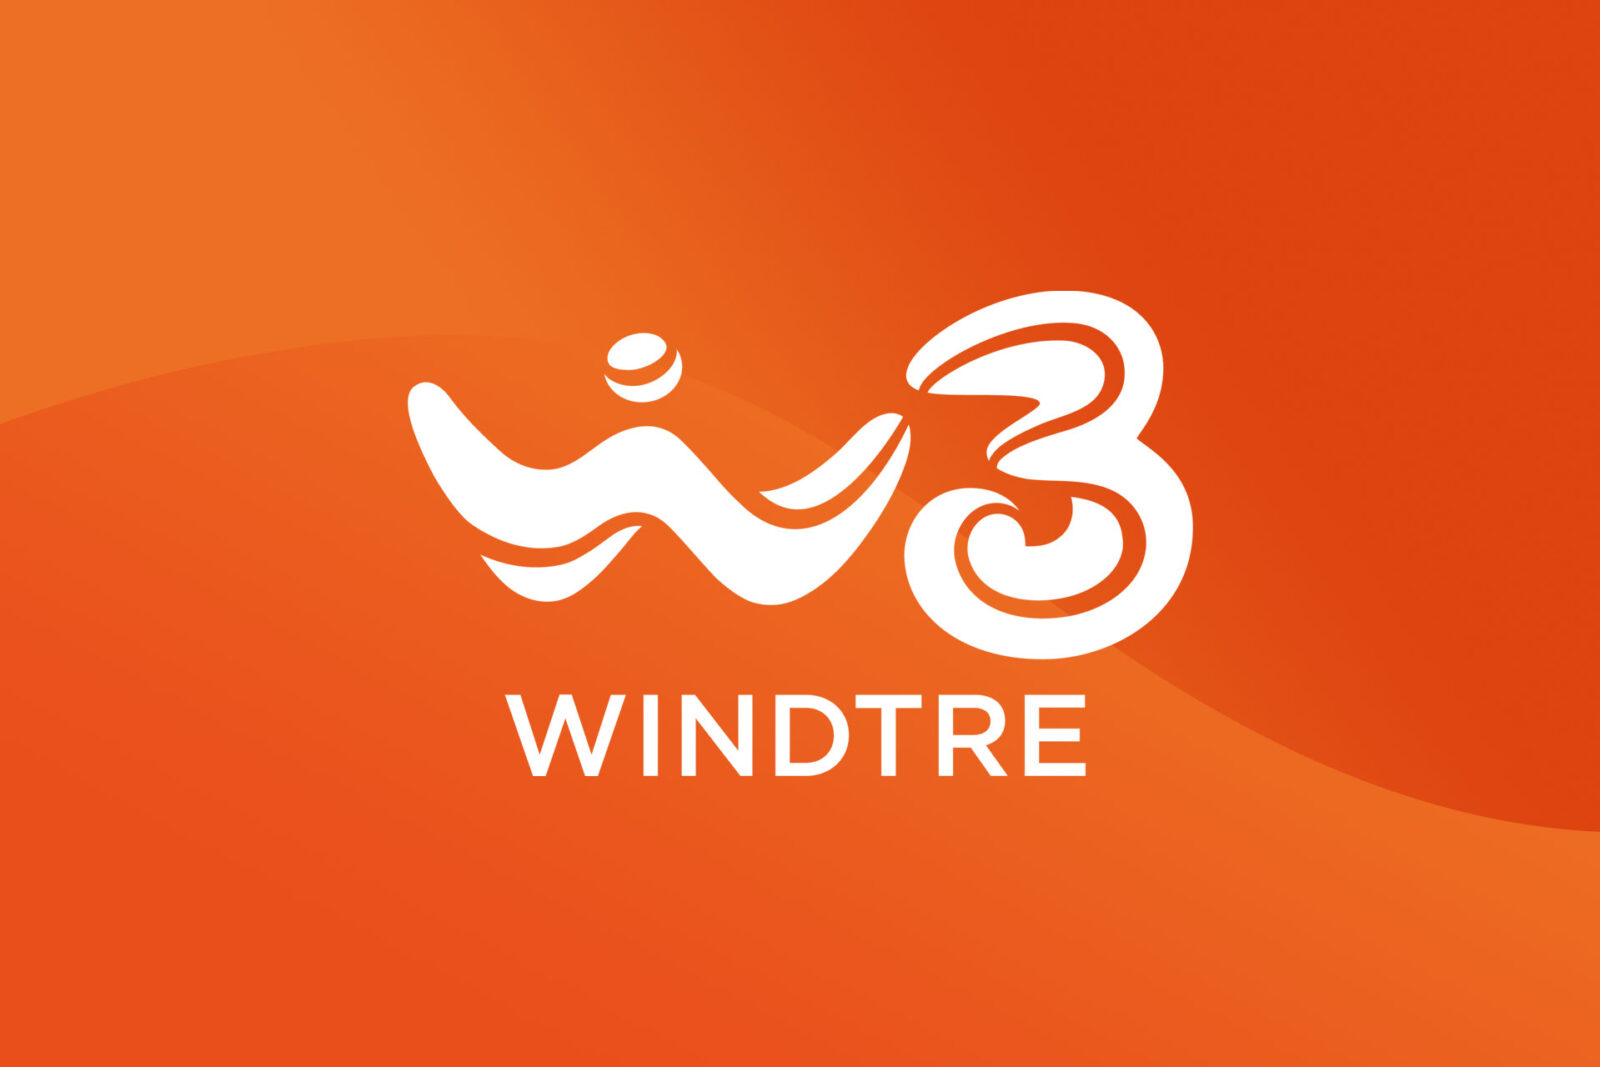 WindTre offerte smartphone zero euro